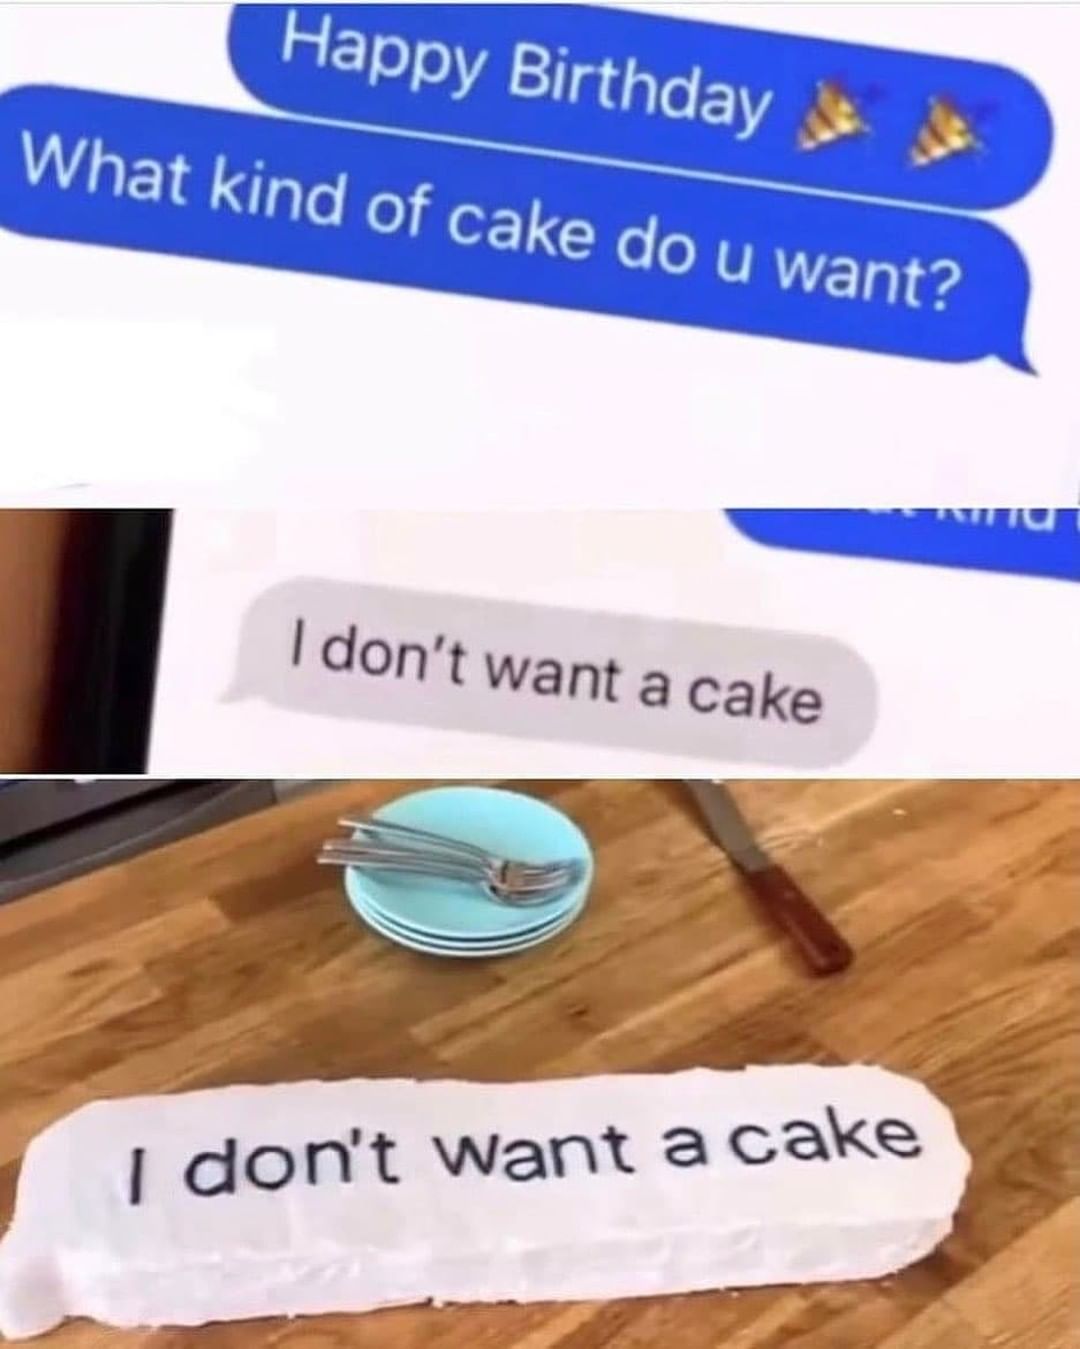 Happy Birthday. What kind of cake do u want? I don't want a cake. I don't want a cake.